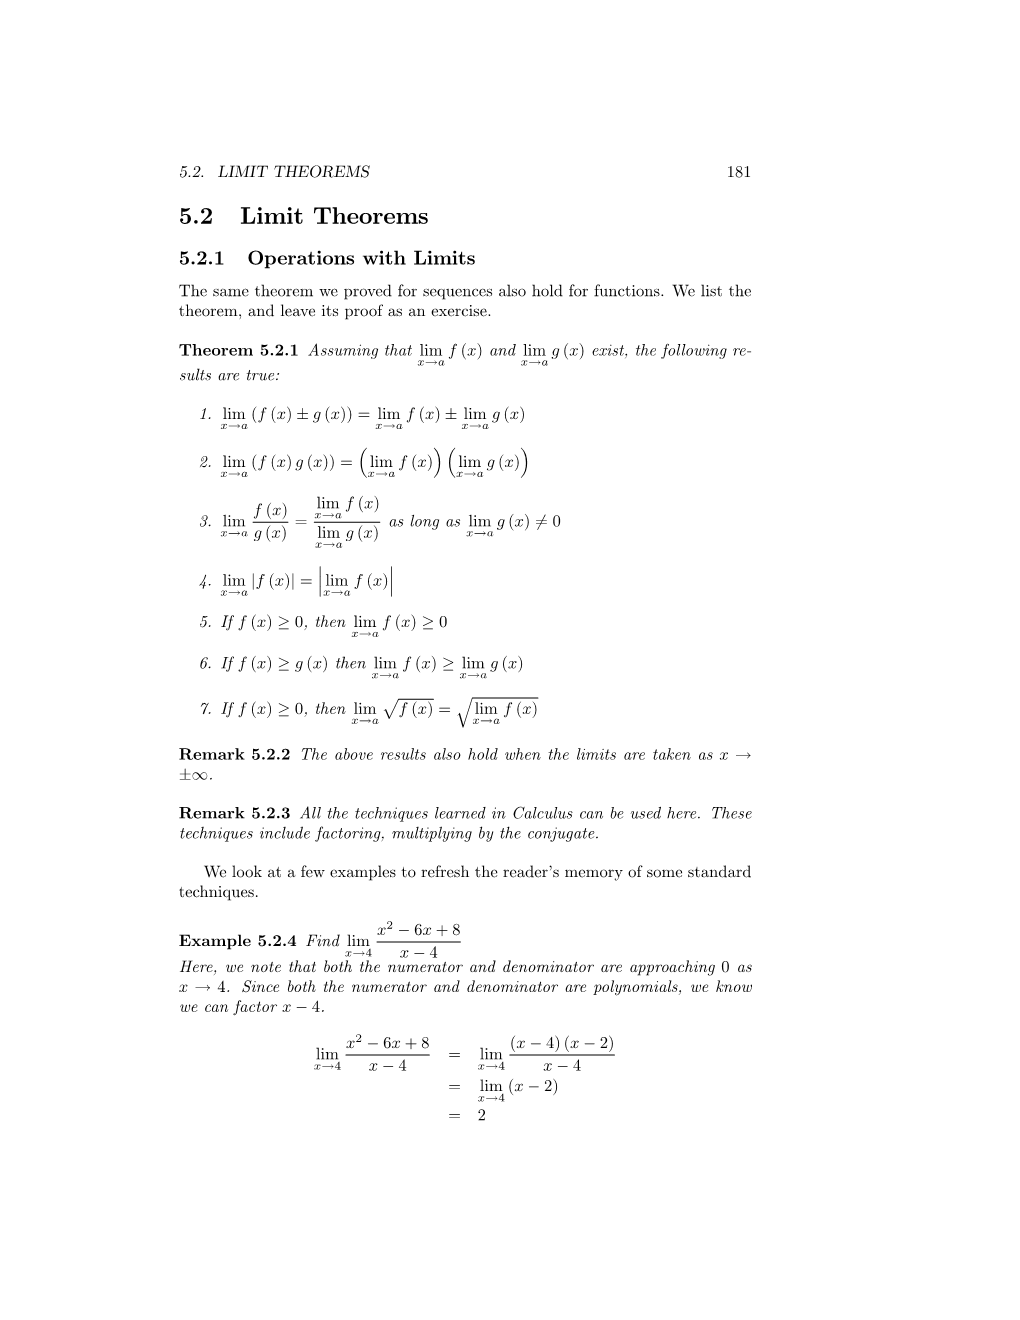 5.2 Limit Theorems